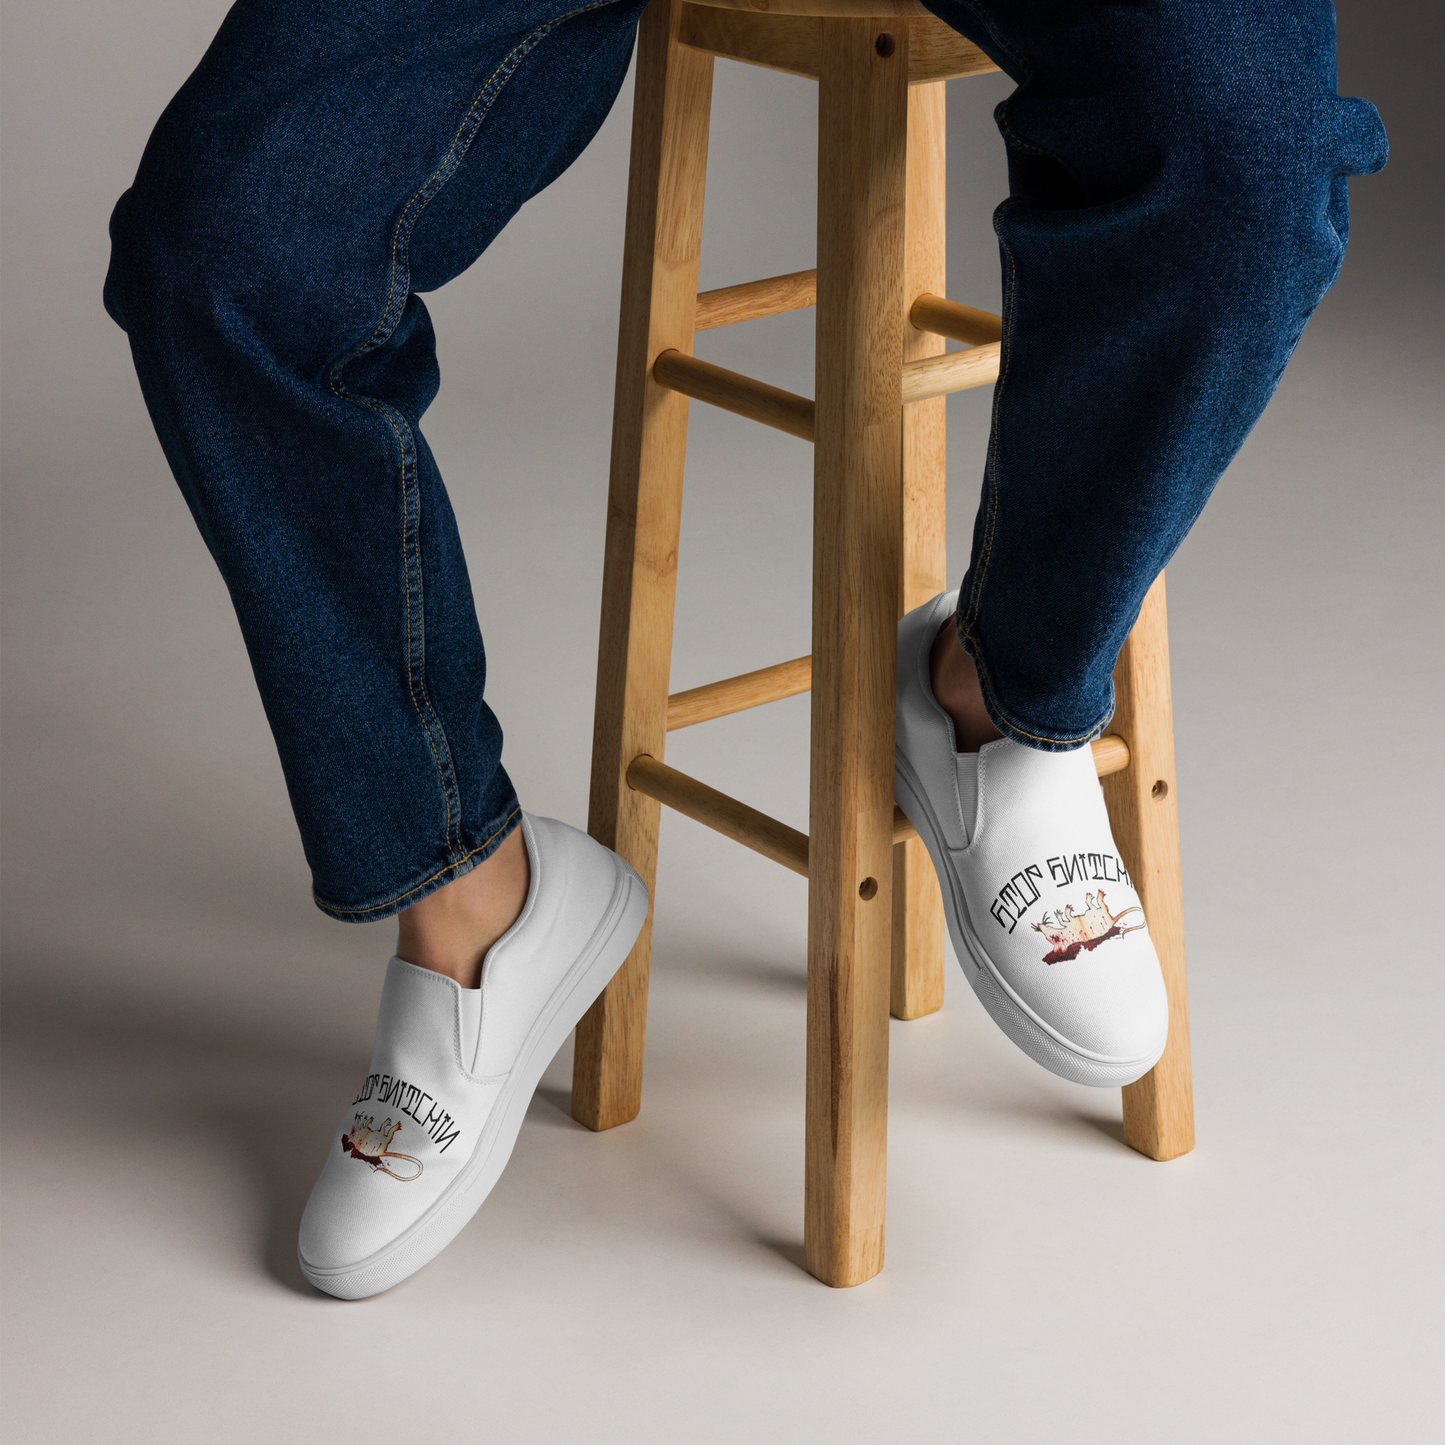 Men’s Fink White slip-on canvas shoes